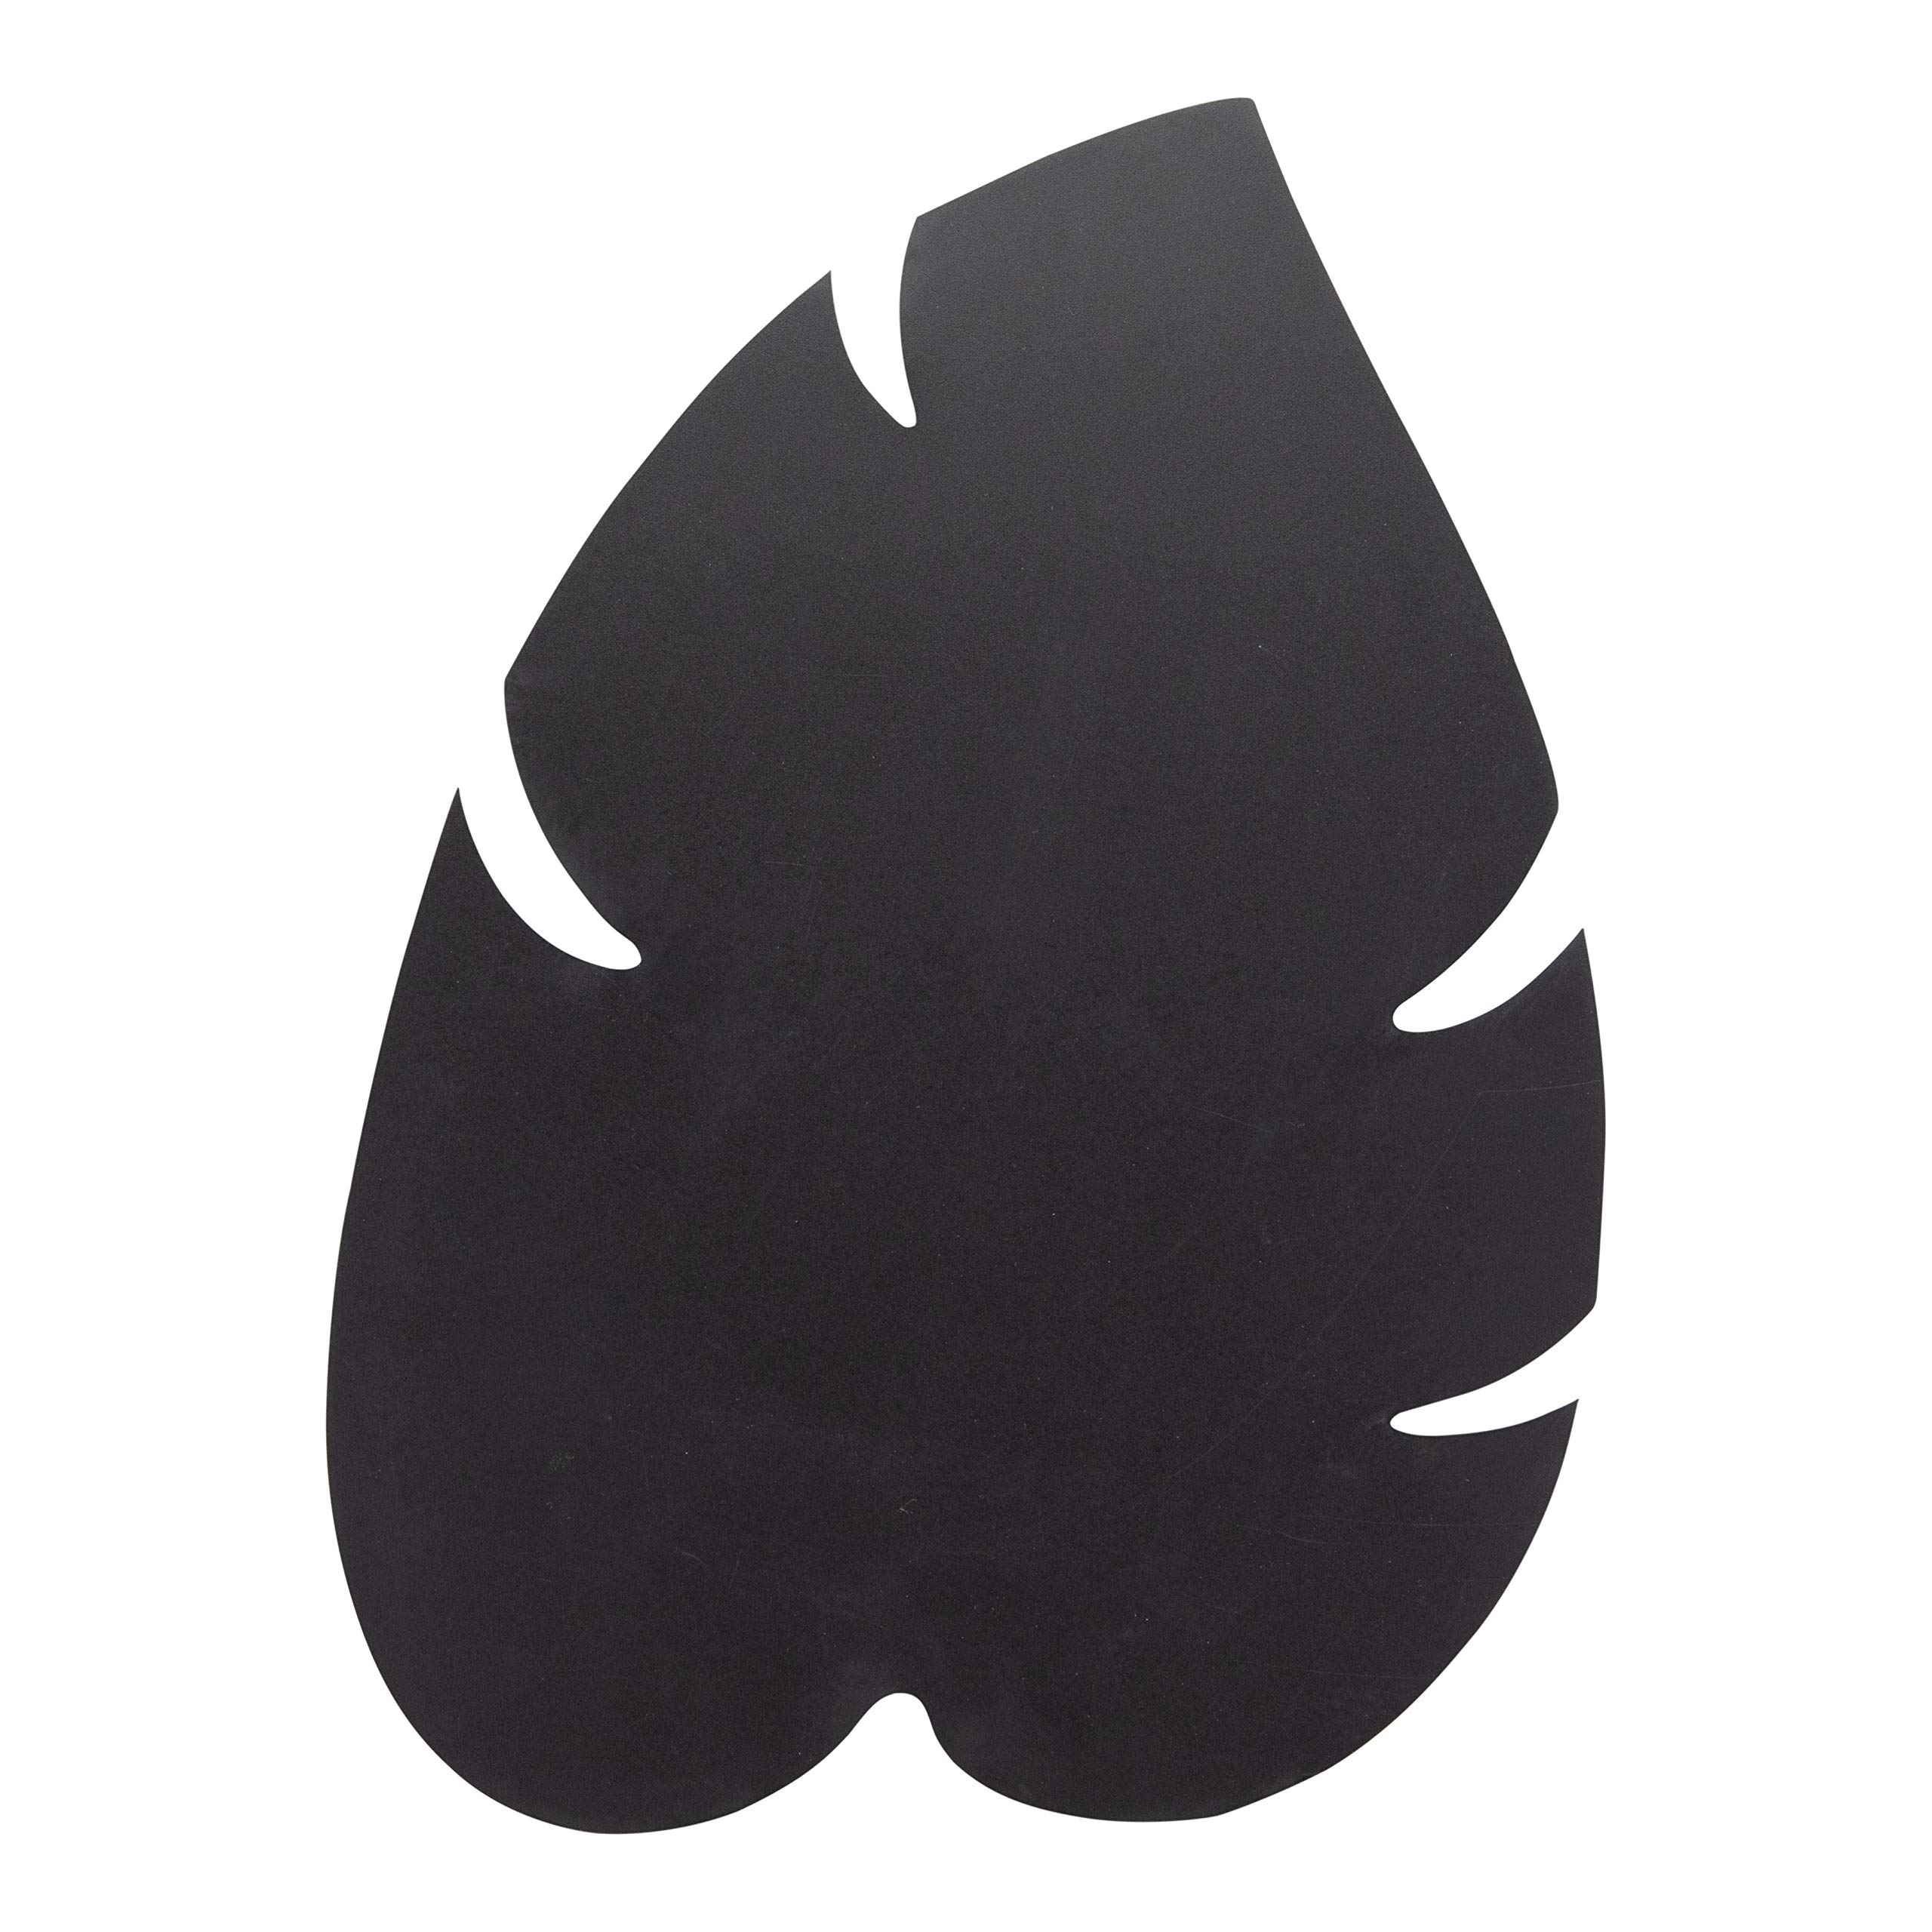 Lavagna Silhouette da parete - 43,8x29,6 cm - forma foglia - nero - Securit